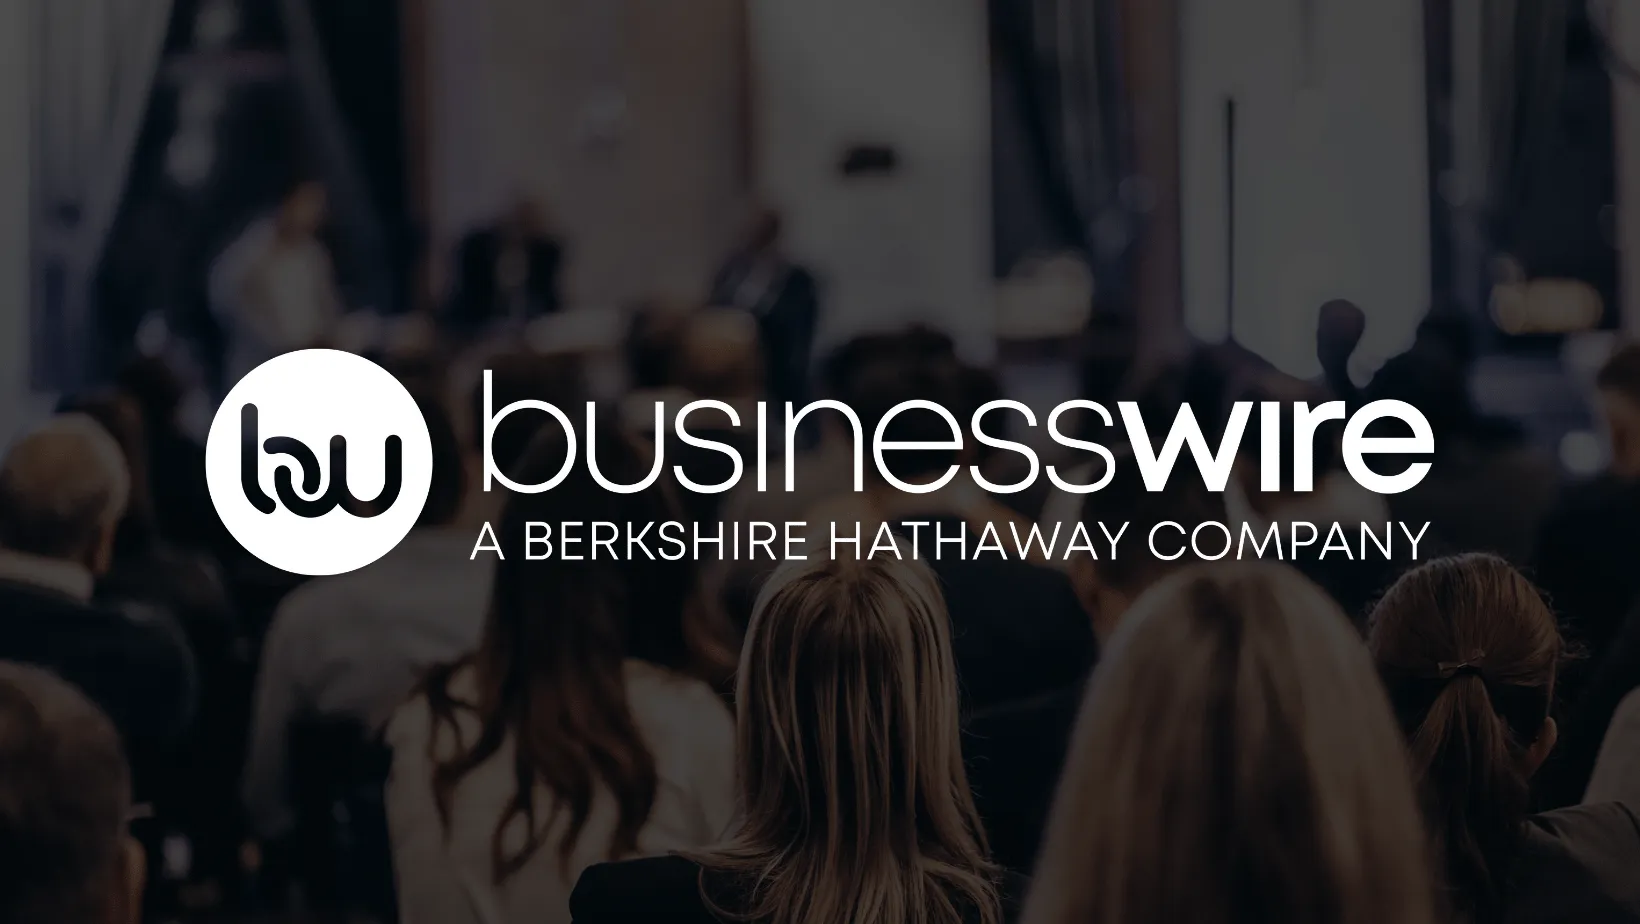 White Business Newswire logo over a dark background.